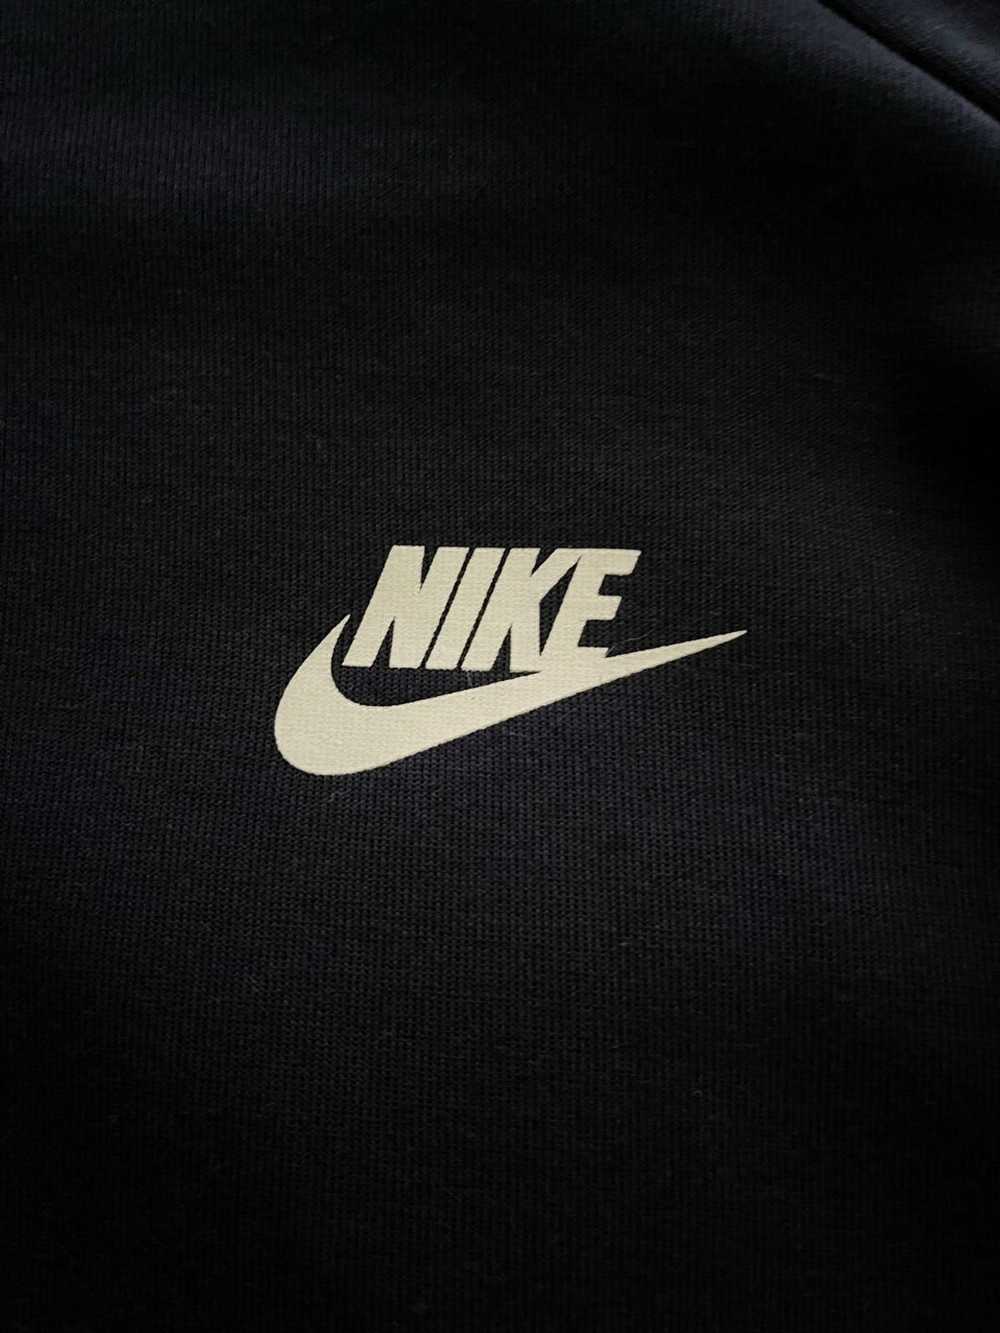 Nike Nike - Navy Blue Tech Fleece Full-Zip Hoodie - image 3